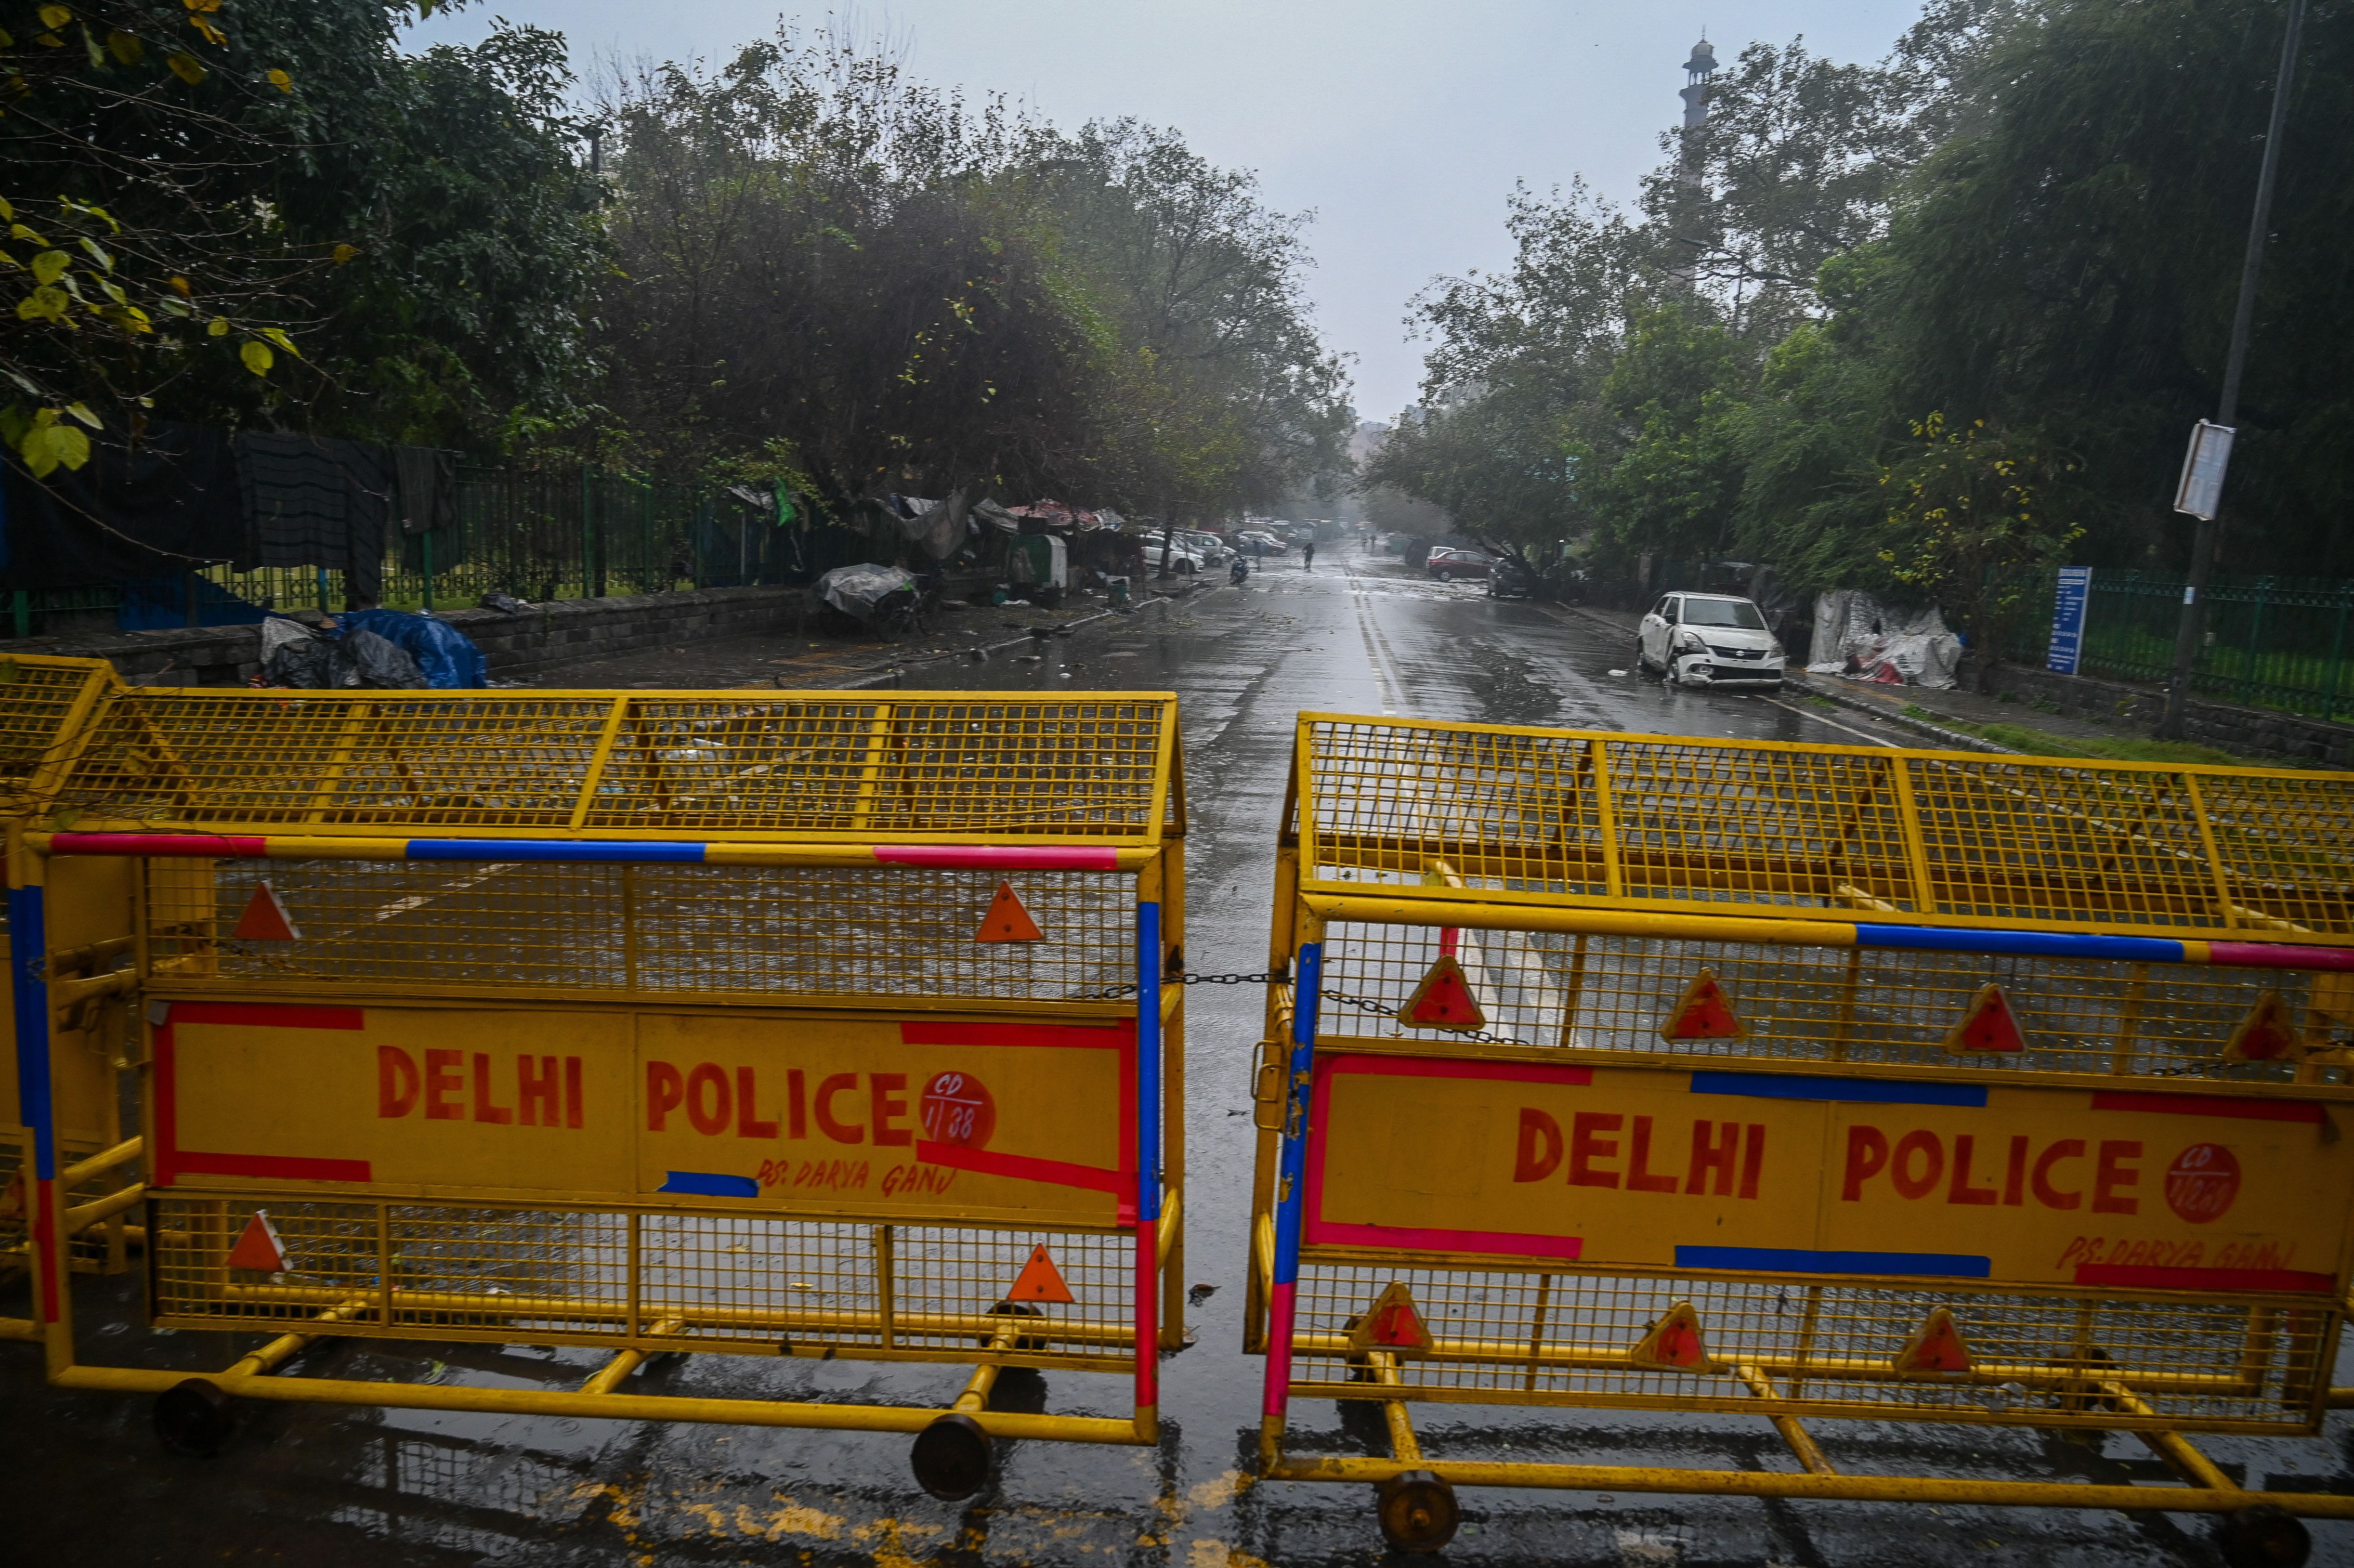 Representative: A Delhi police barrier blocks a street